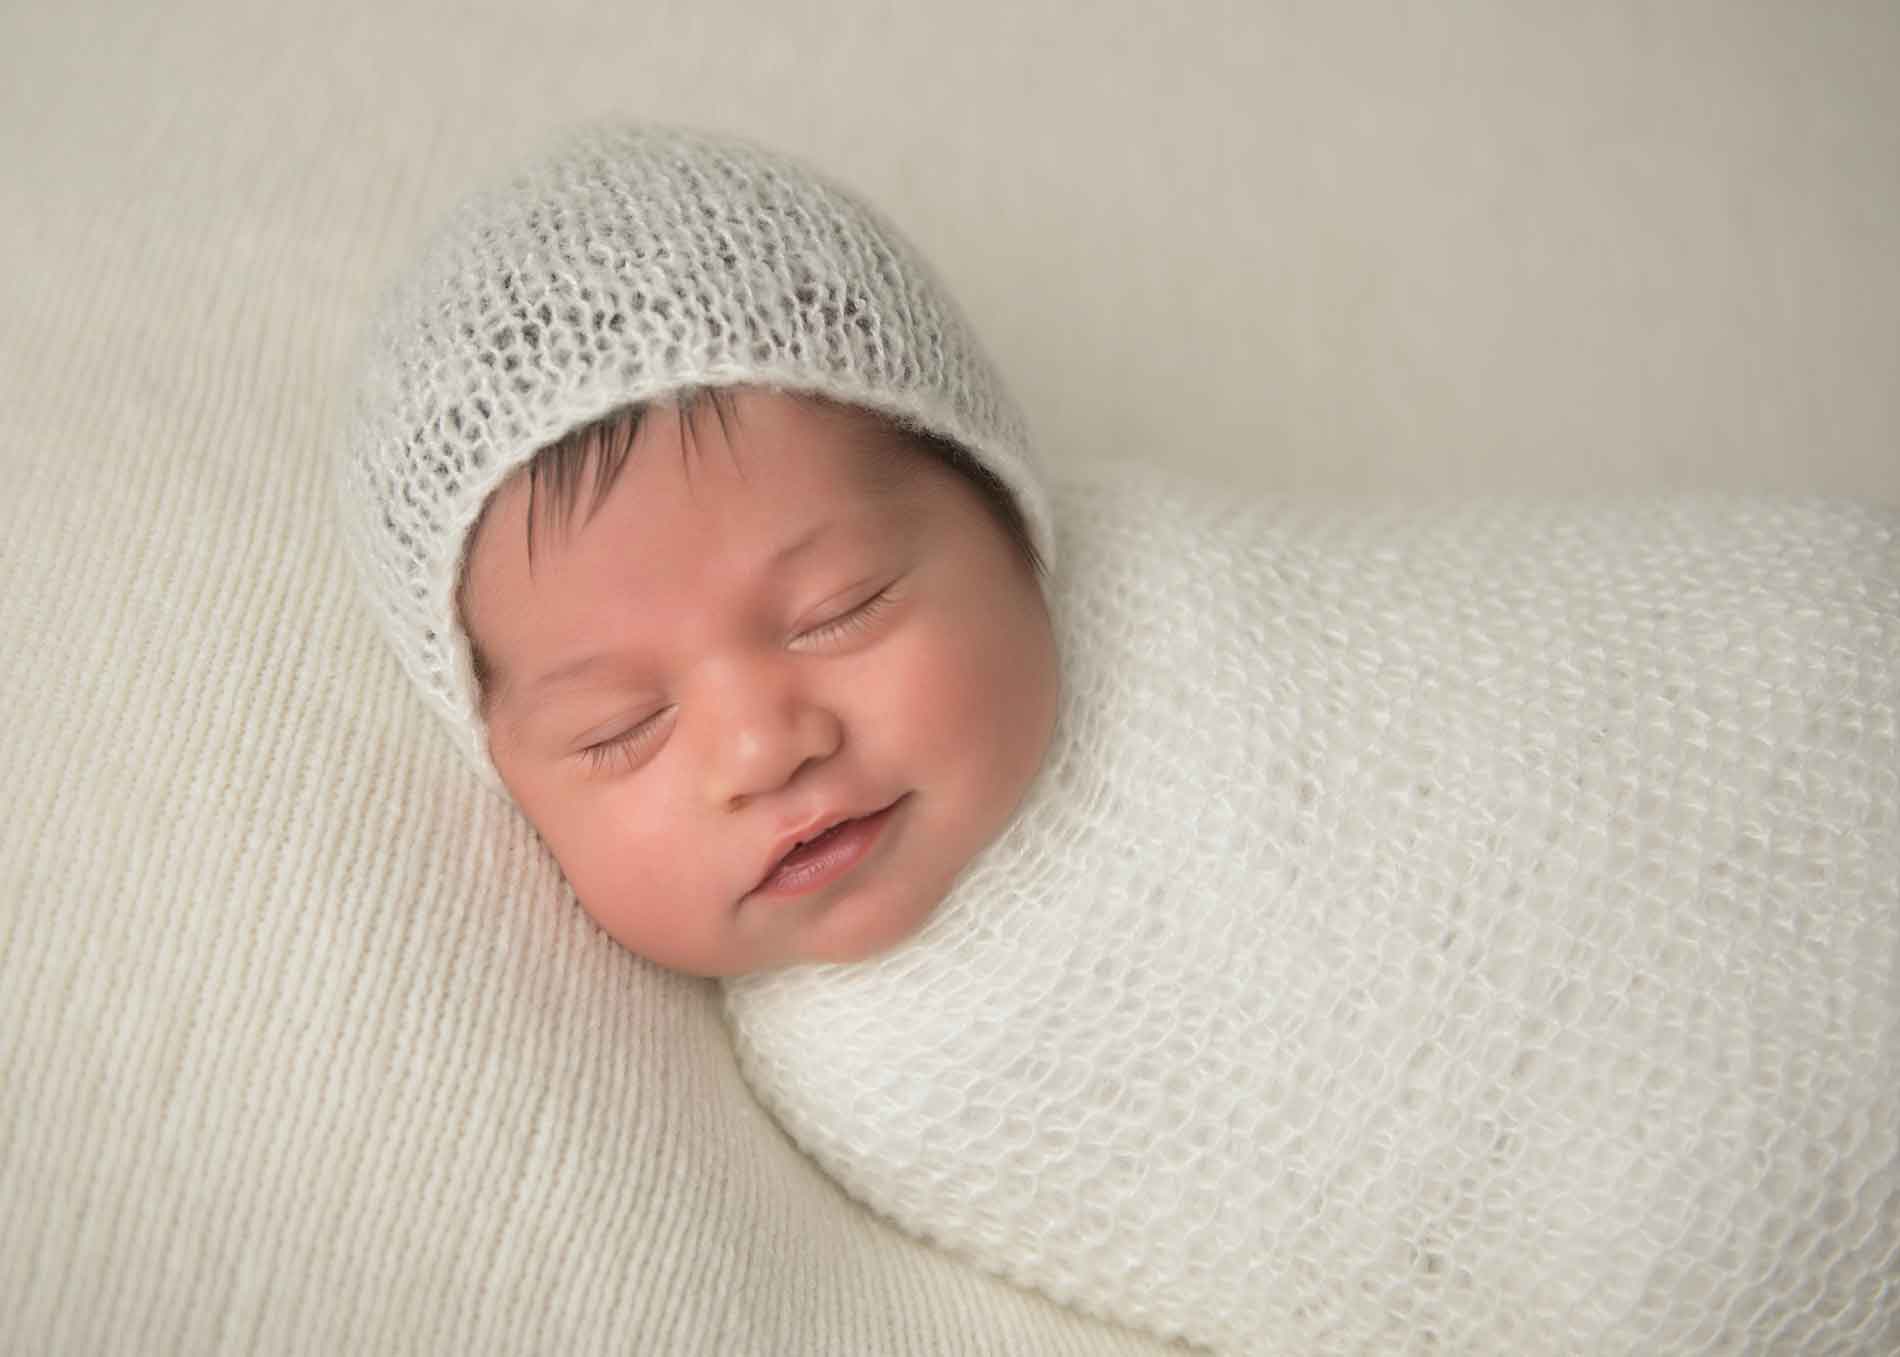 Closeup photo of a sleepy newborn